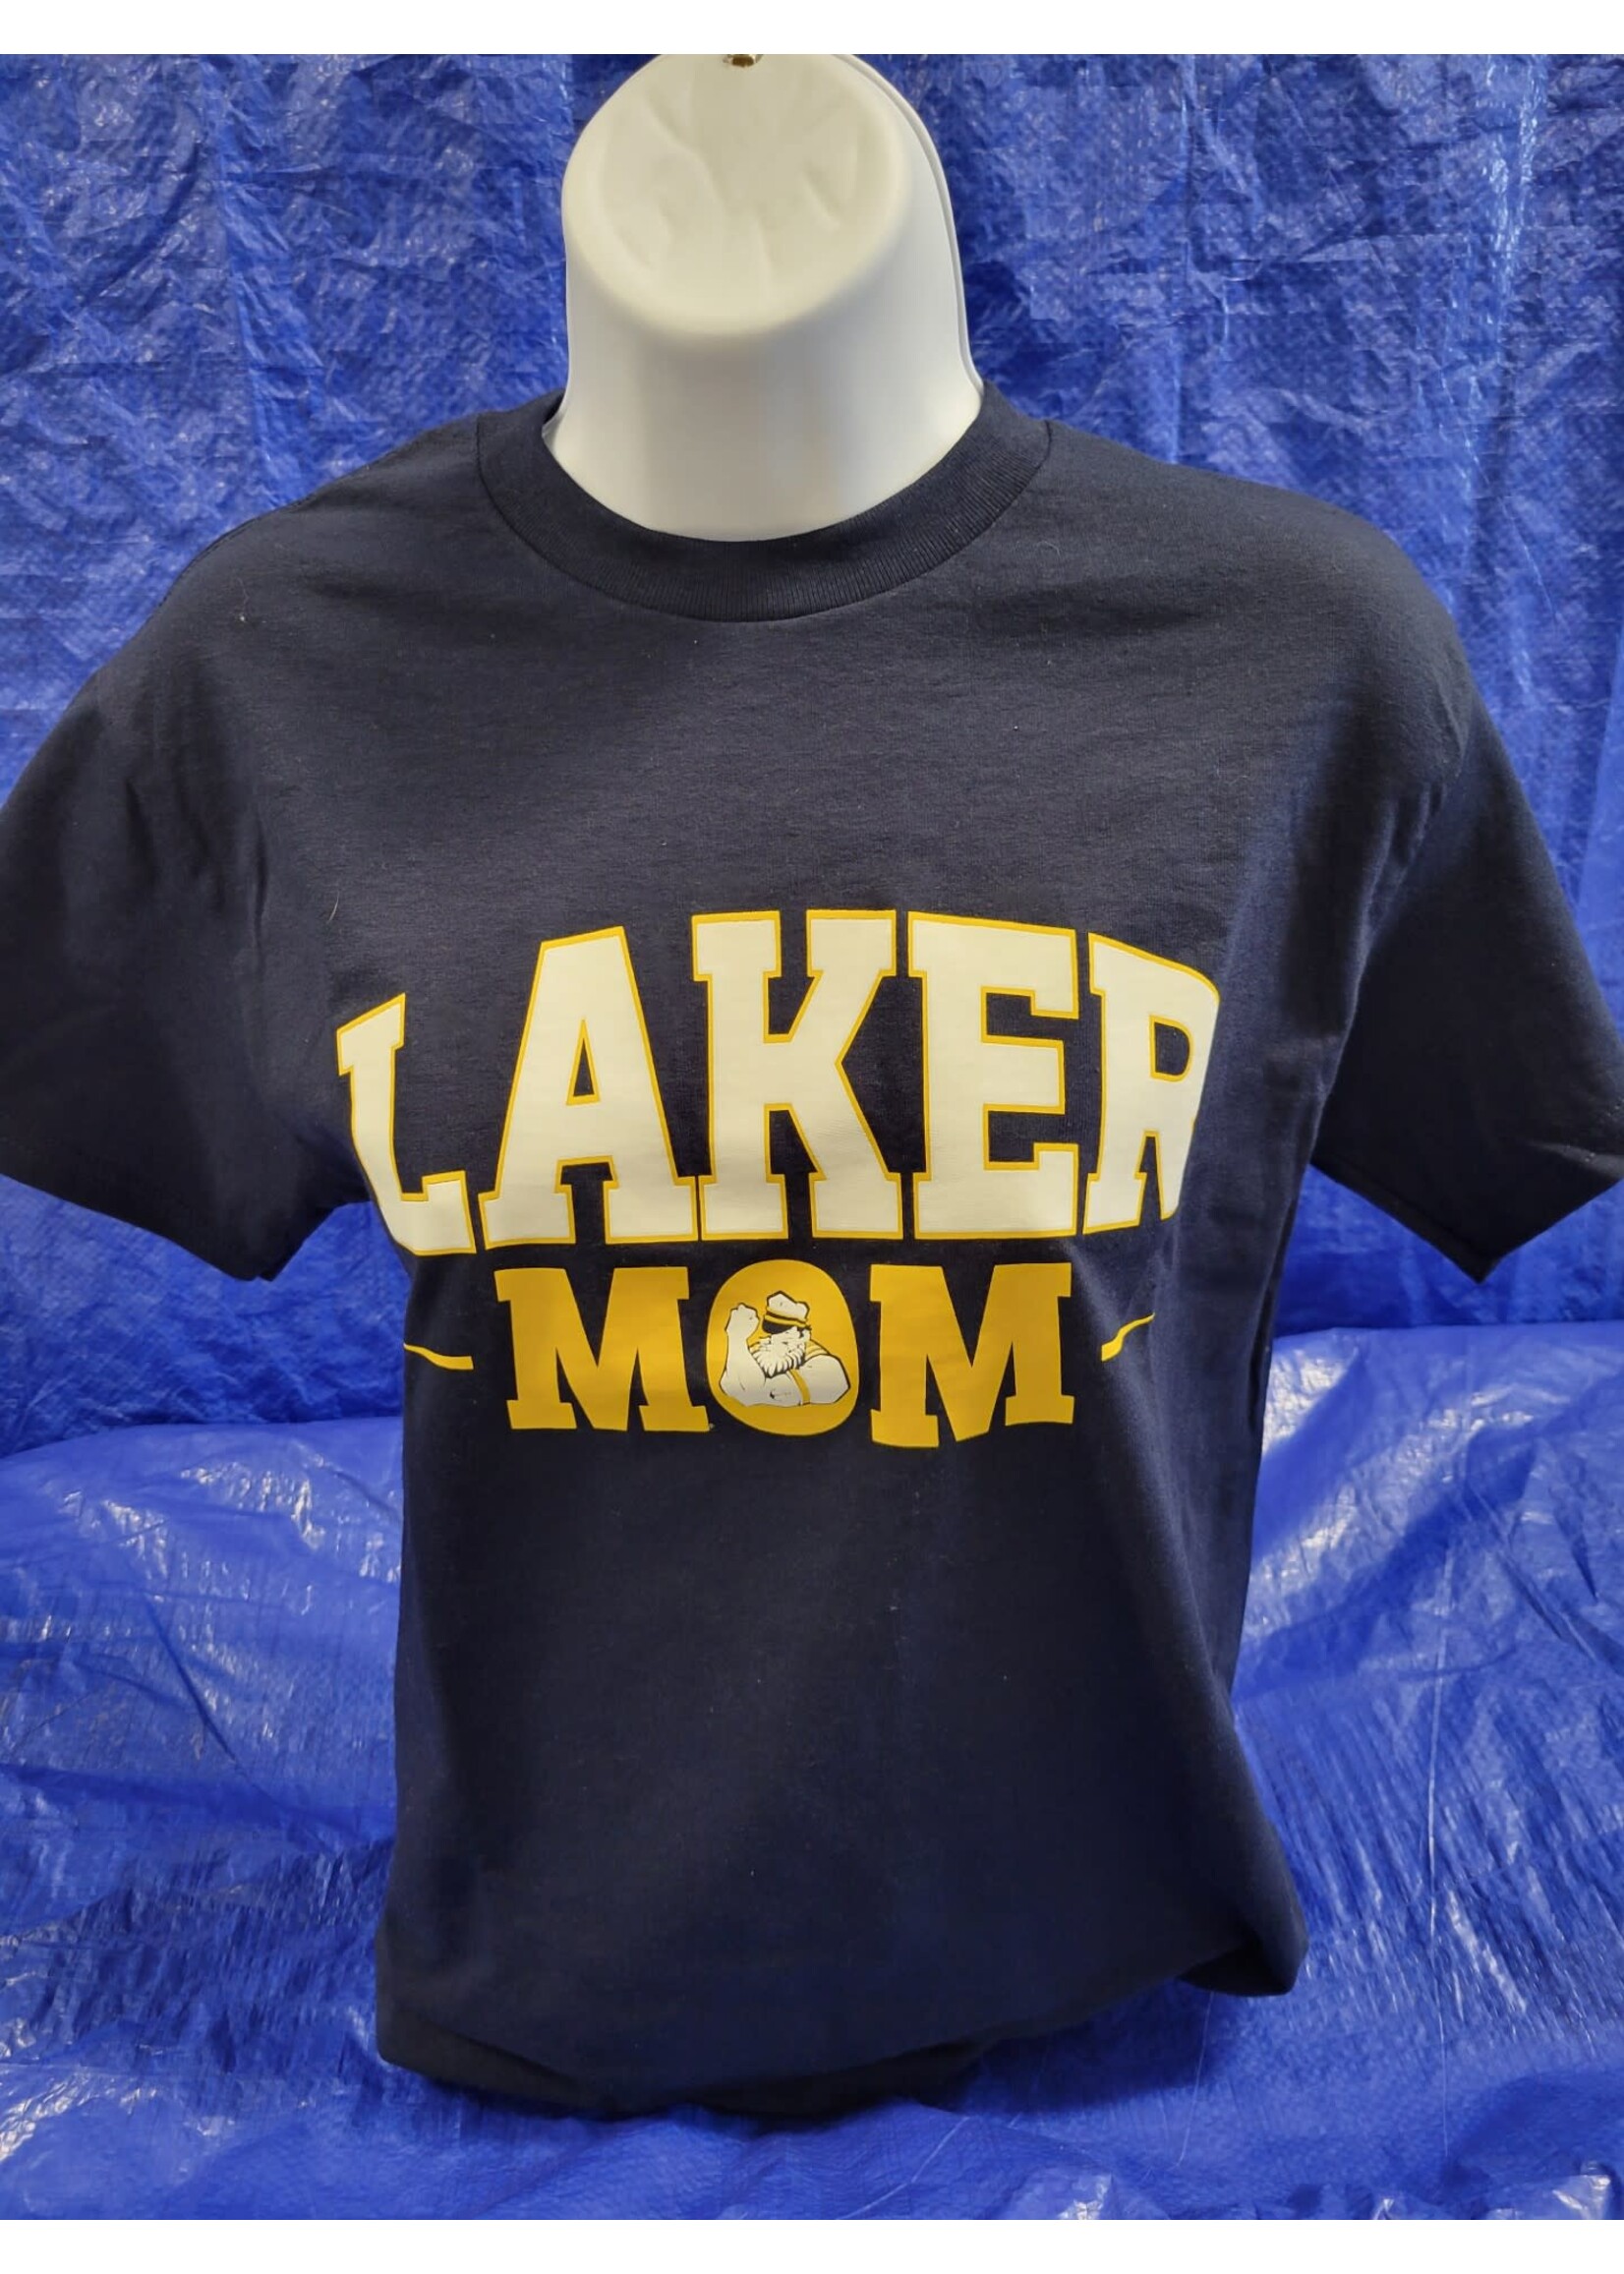 Laker Mom Crew Neck Tee Shirt